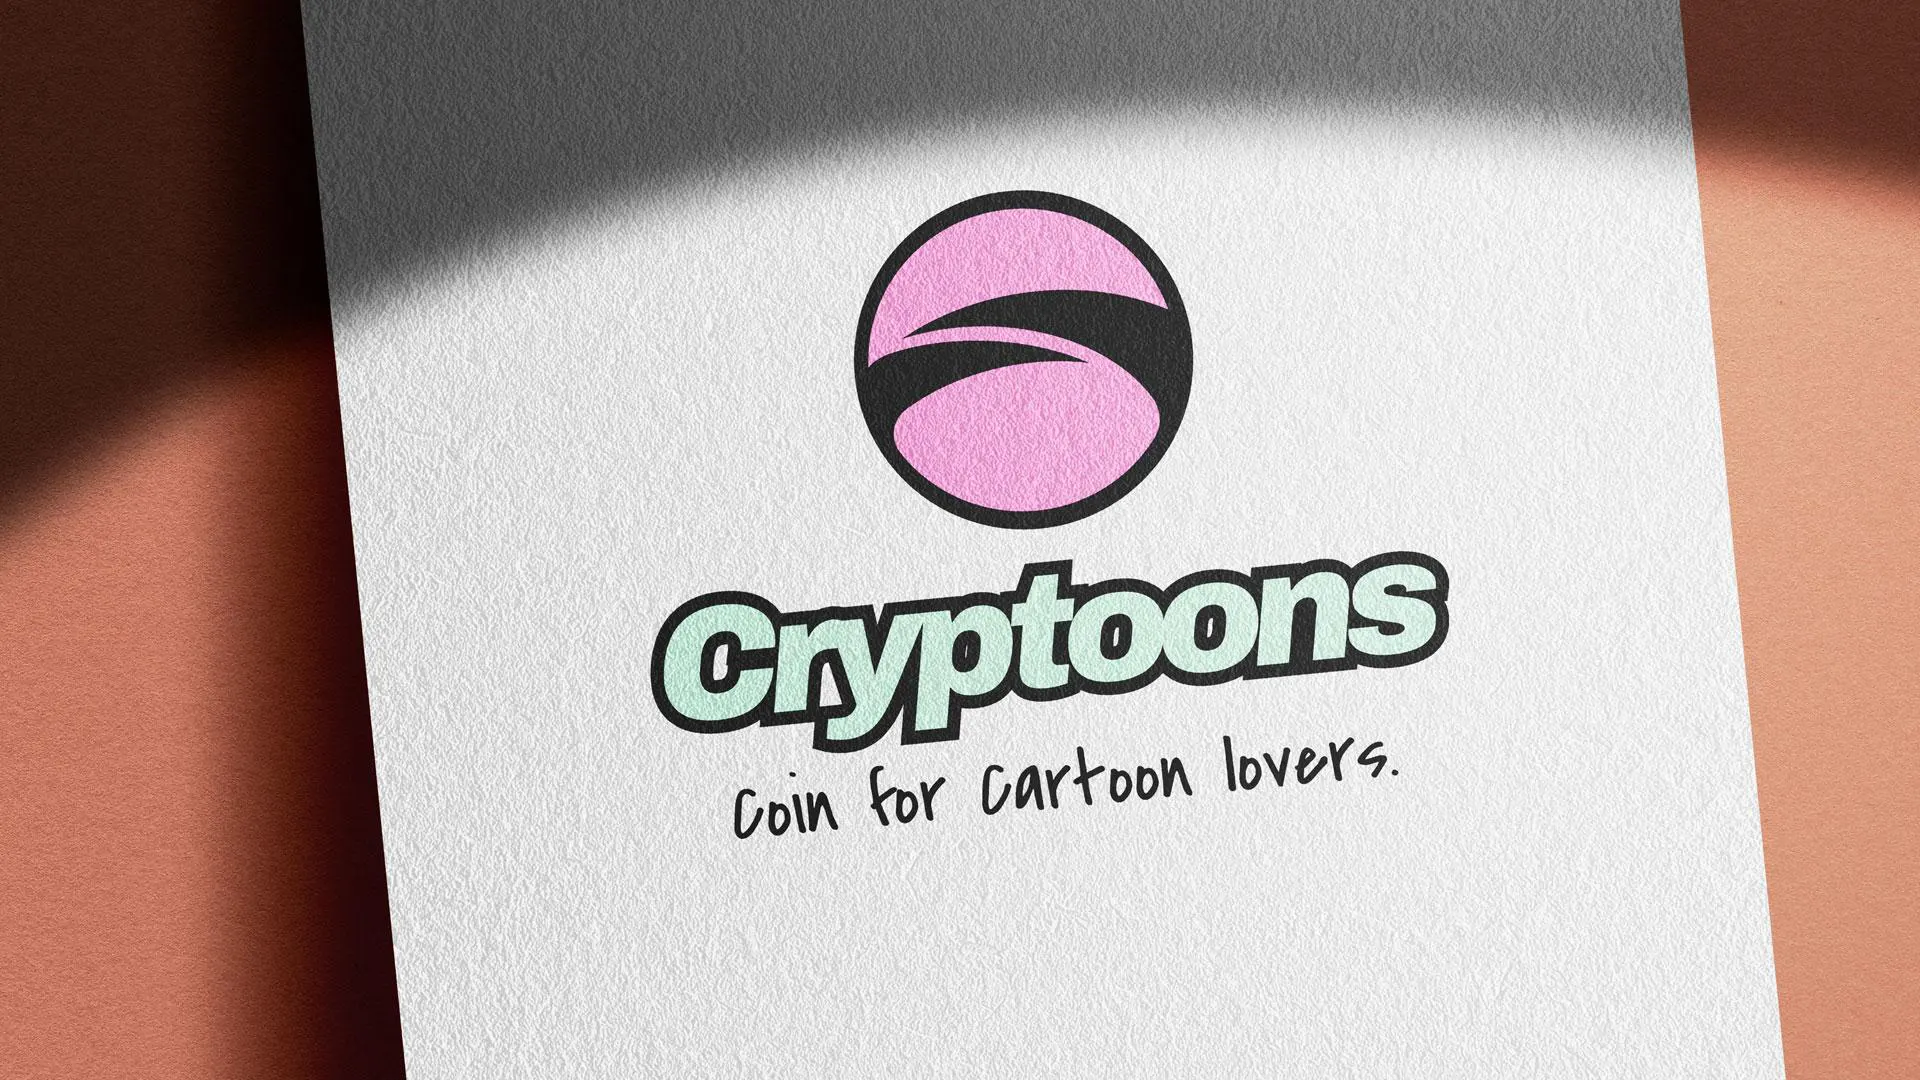 Cryptoons